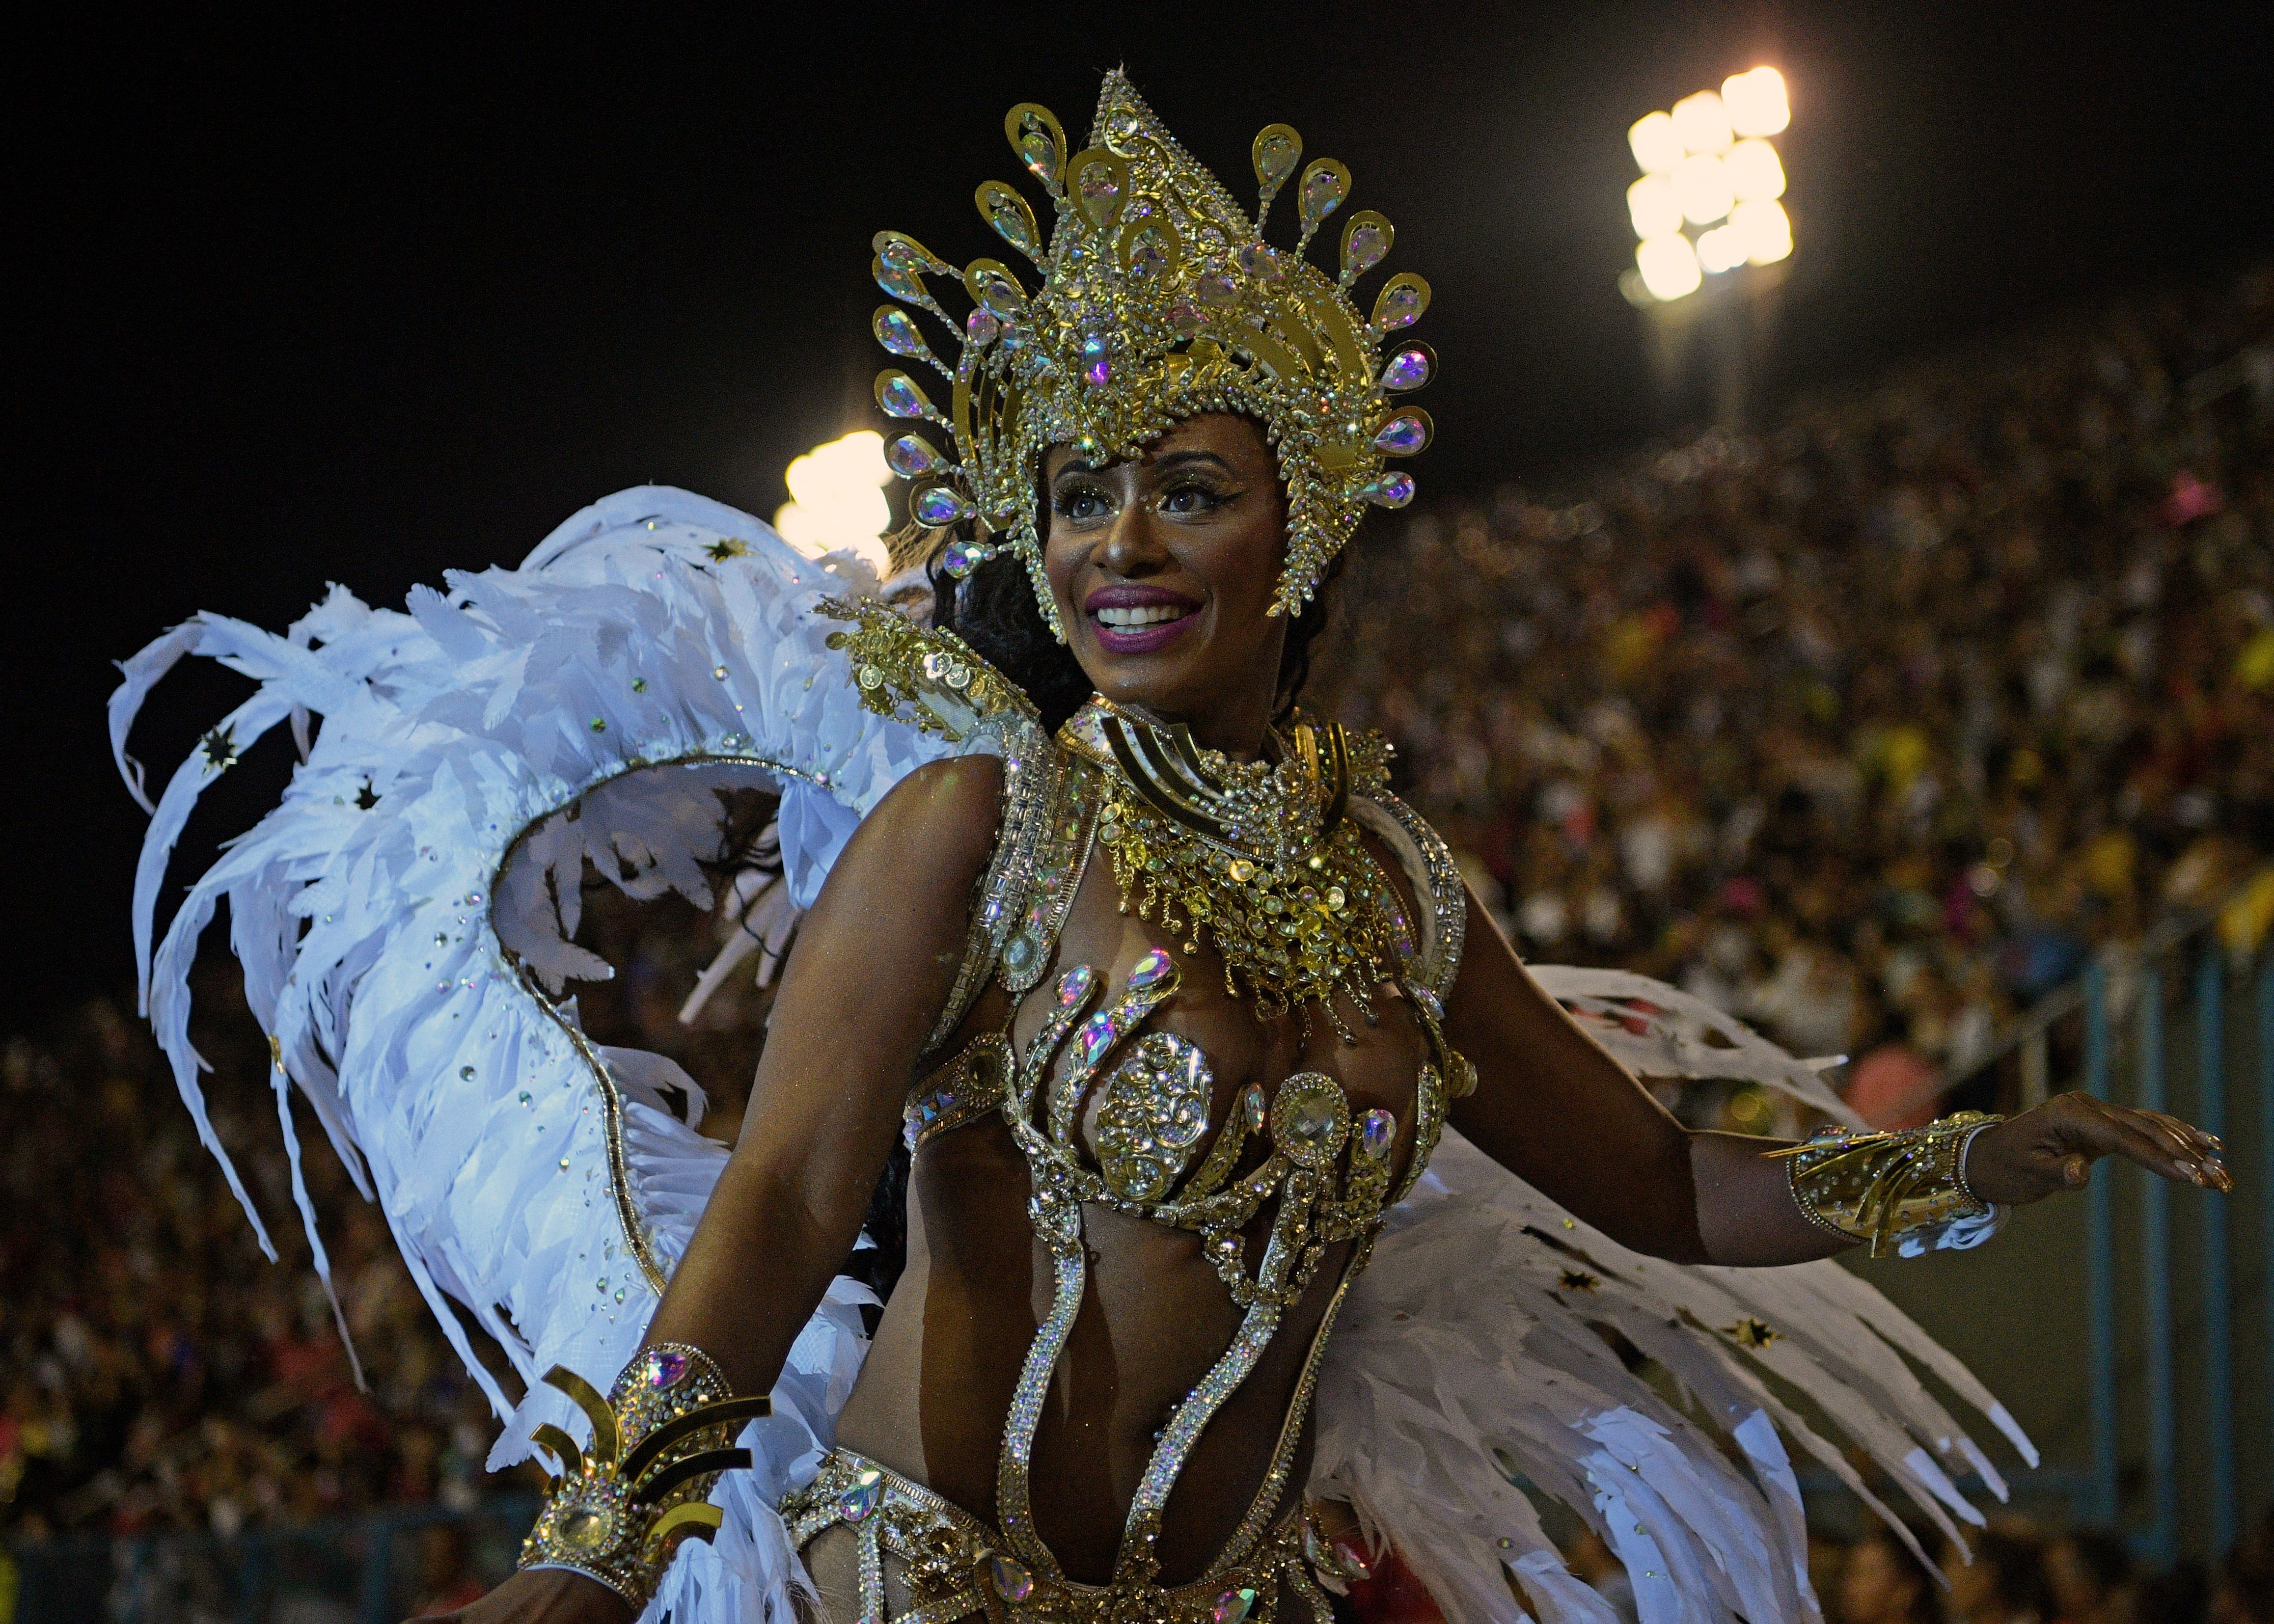 Rio's Carnival parade returns after long pandemic hiatus - The Boston Globe